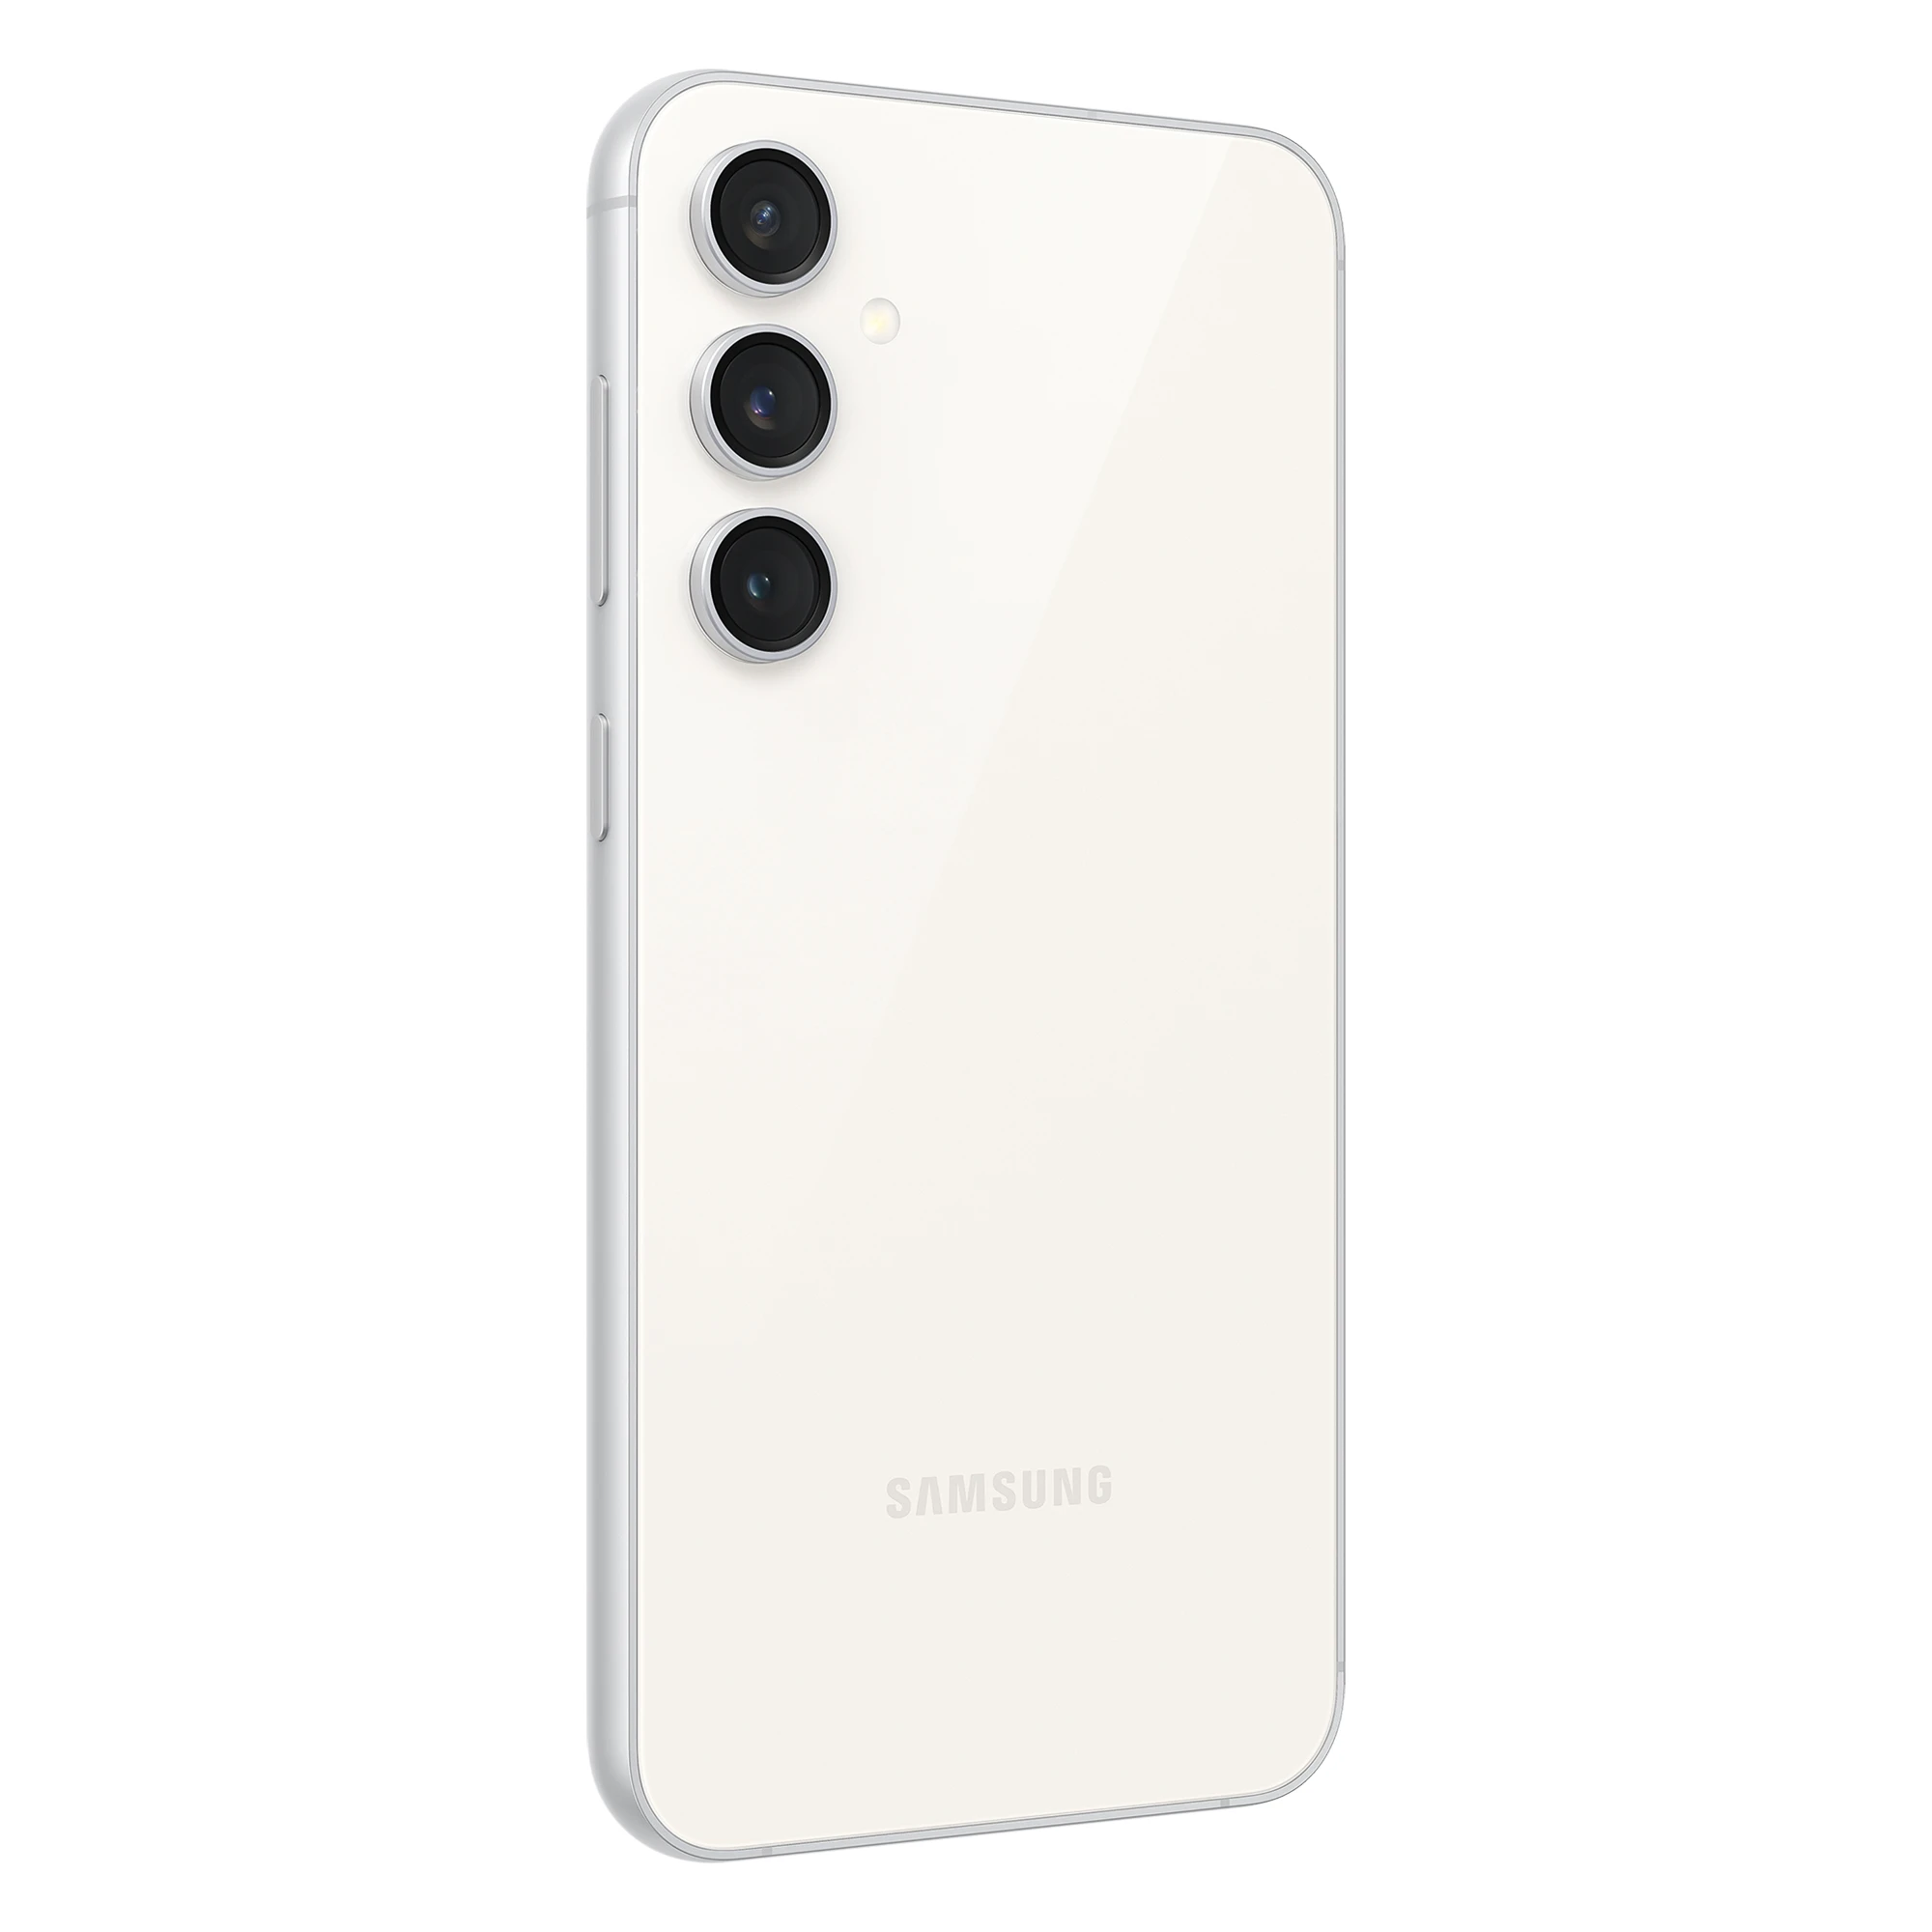 Smartphone Samsung Galaxy S23 FE 5G 256GB Grafite 8GB RAM Tela 6,4 Câm.  Traseira 50